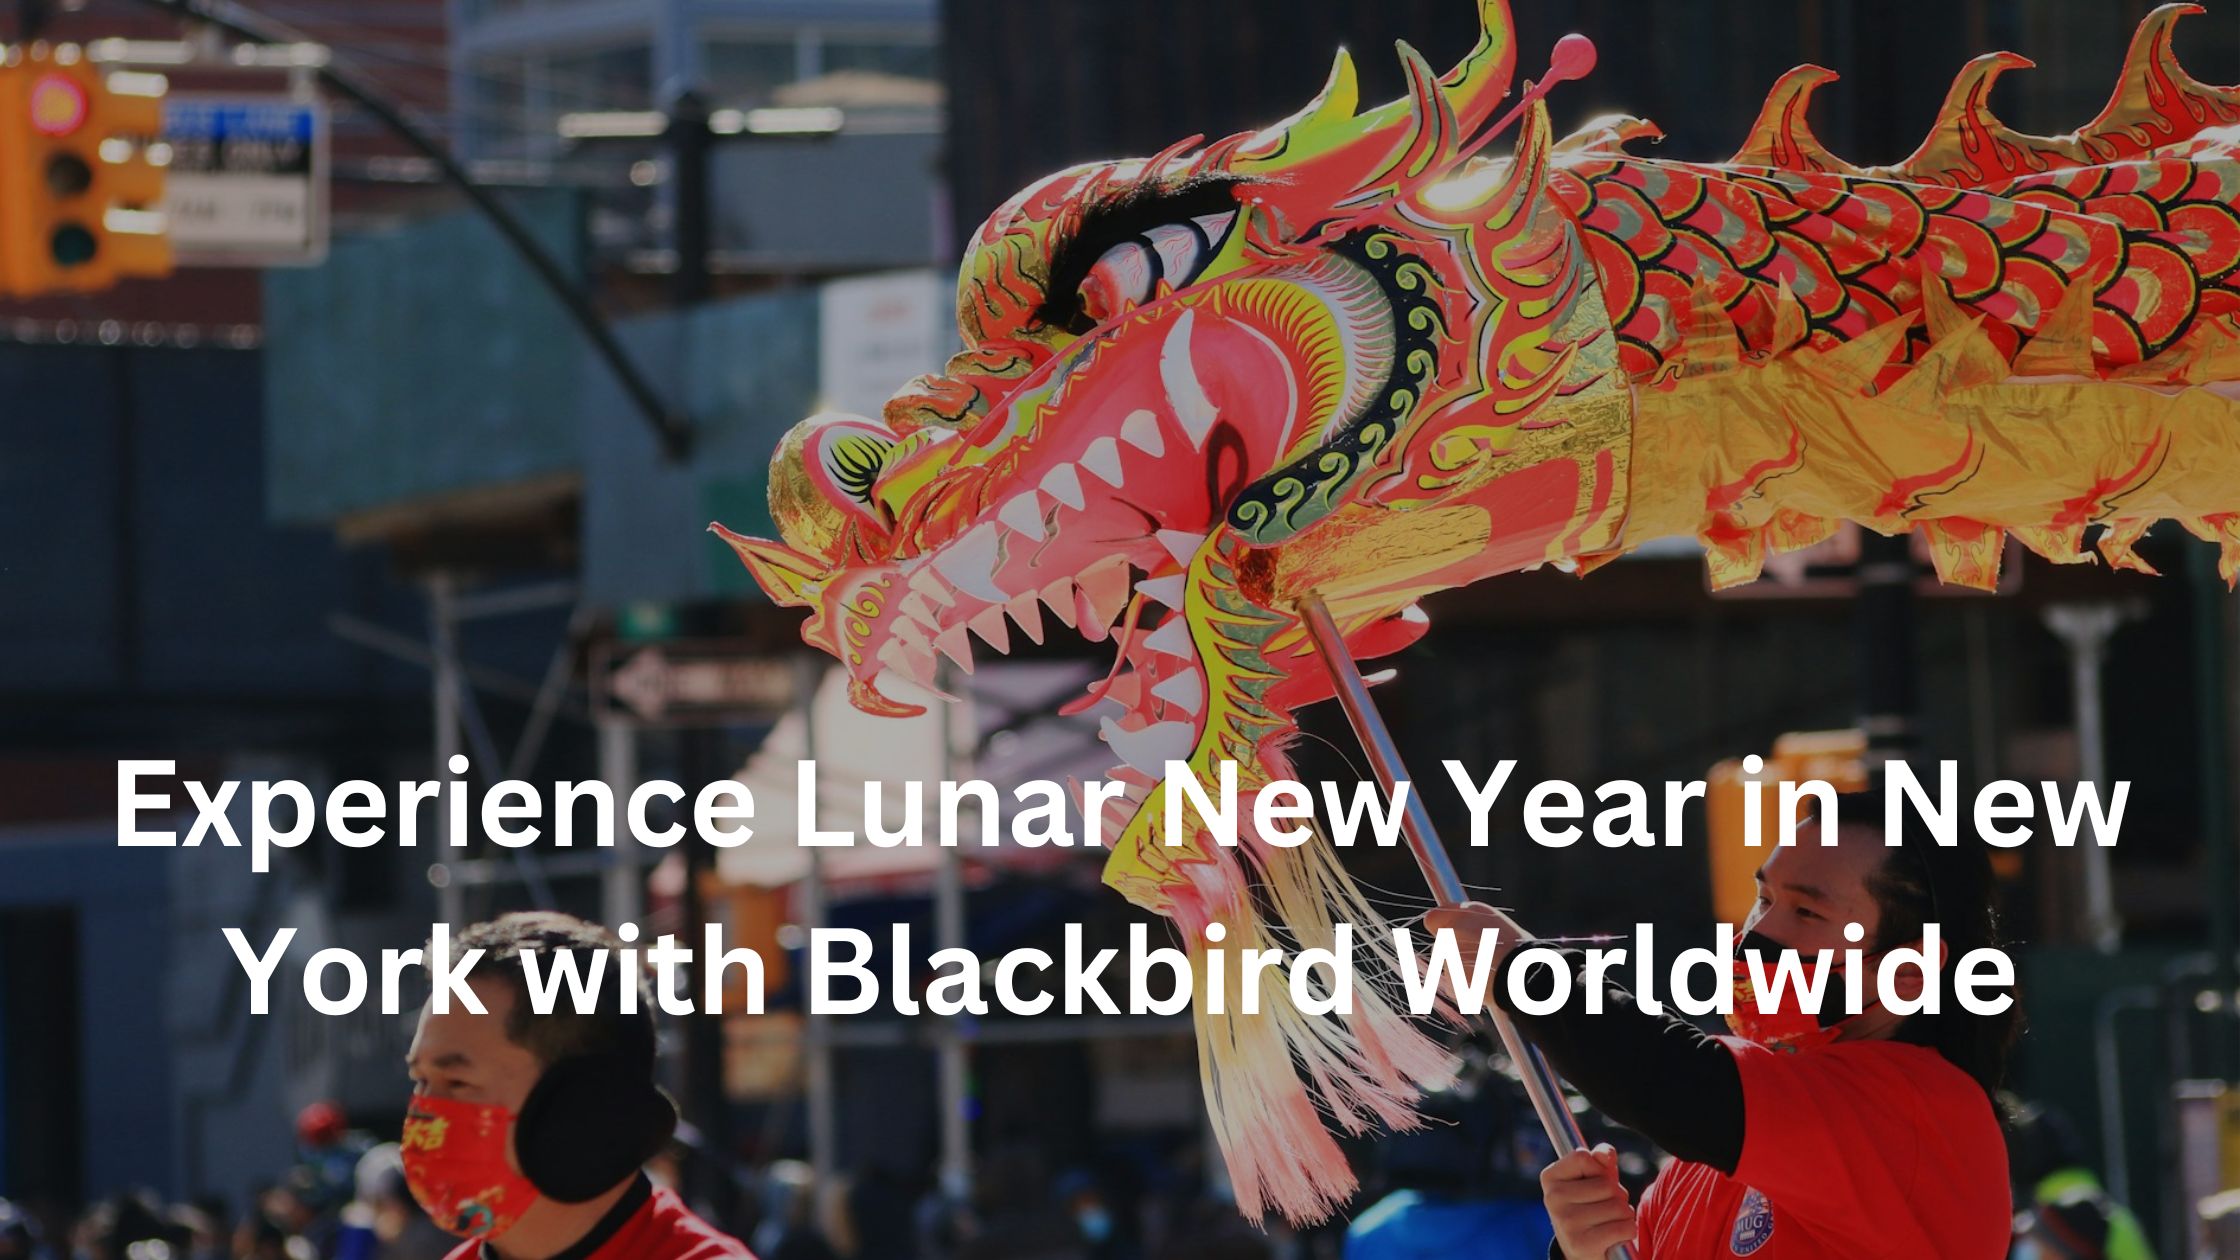 Lunar New Year - Blackbird Worldwide